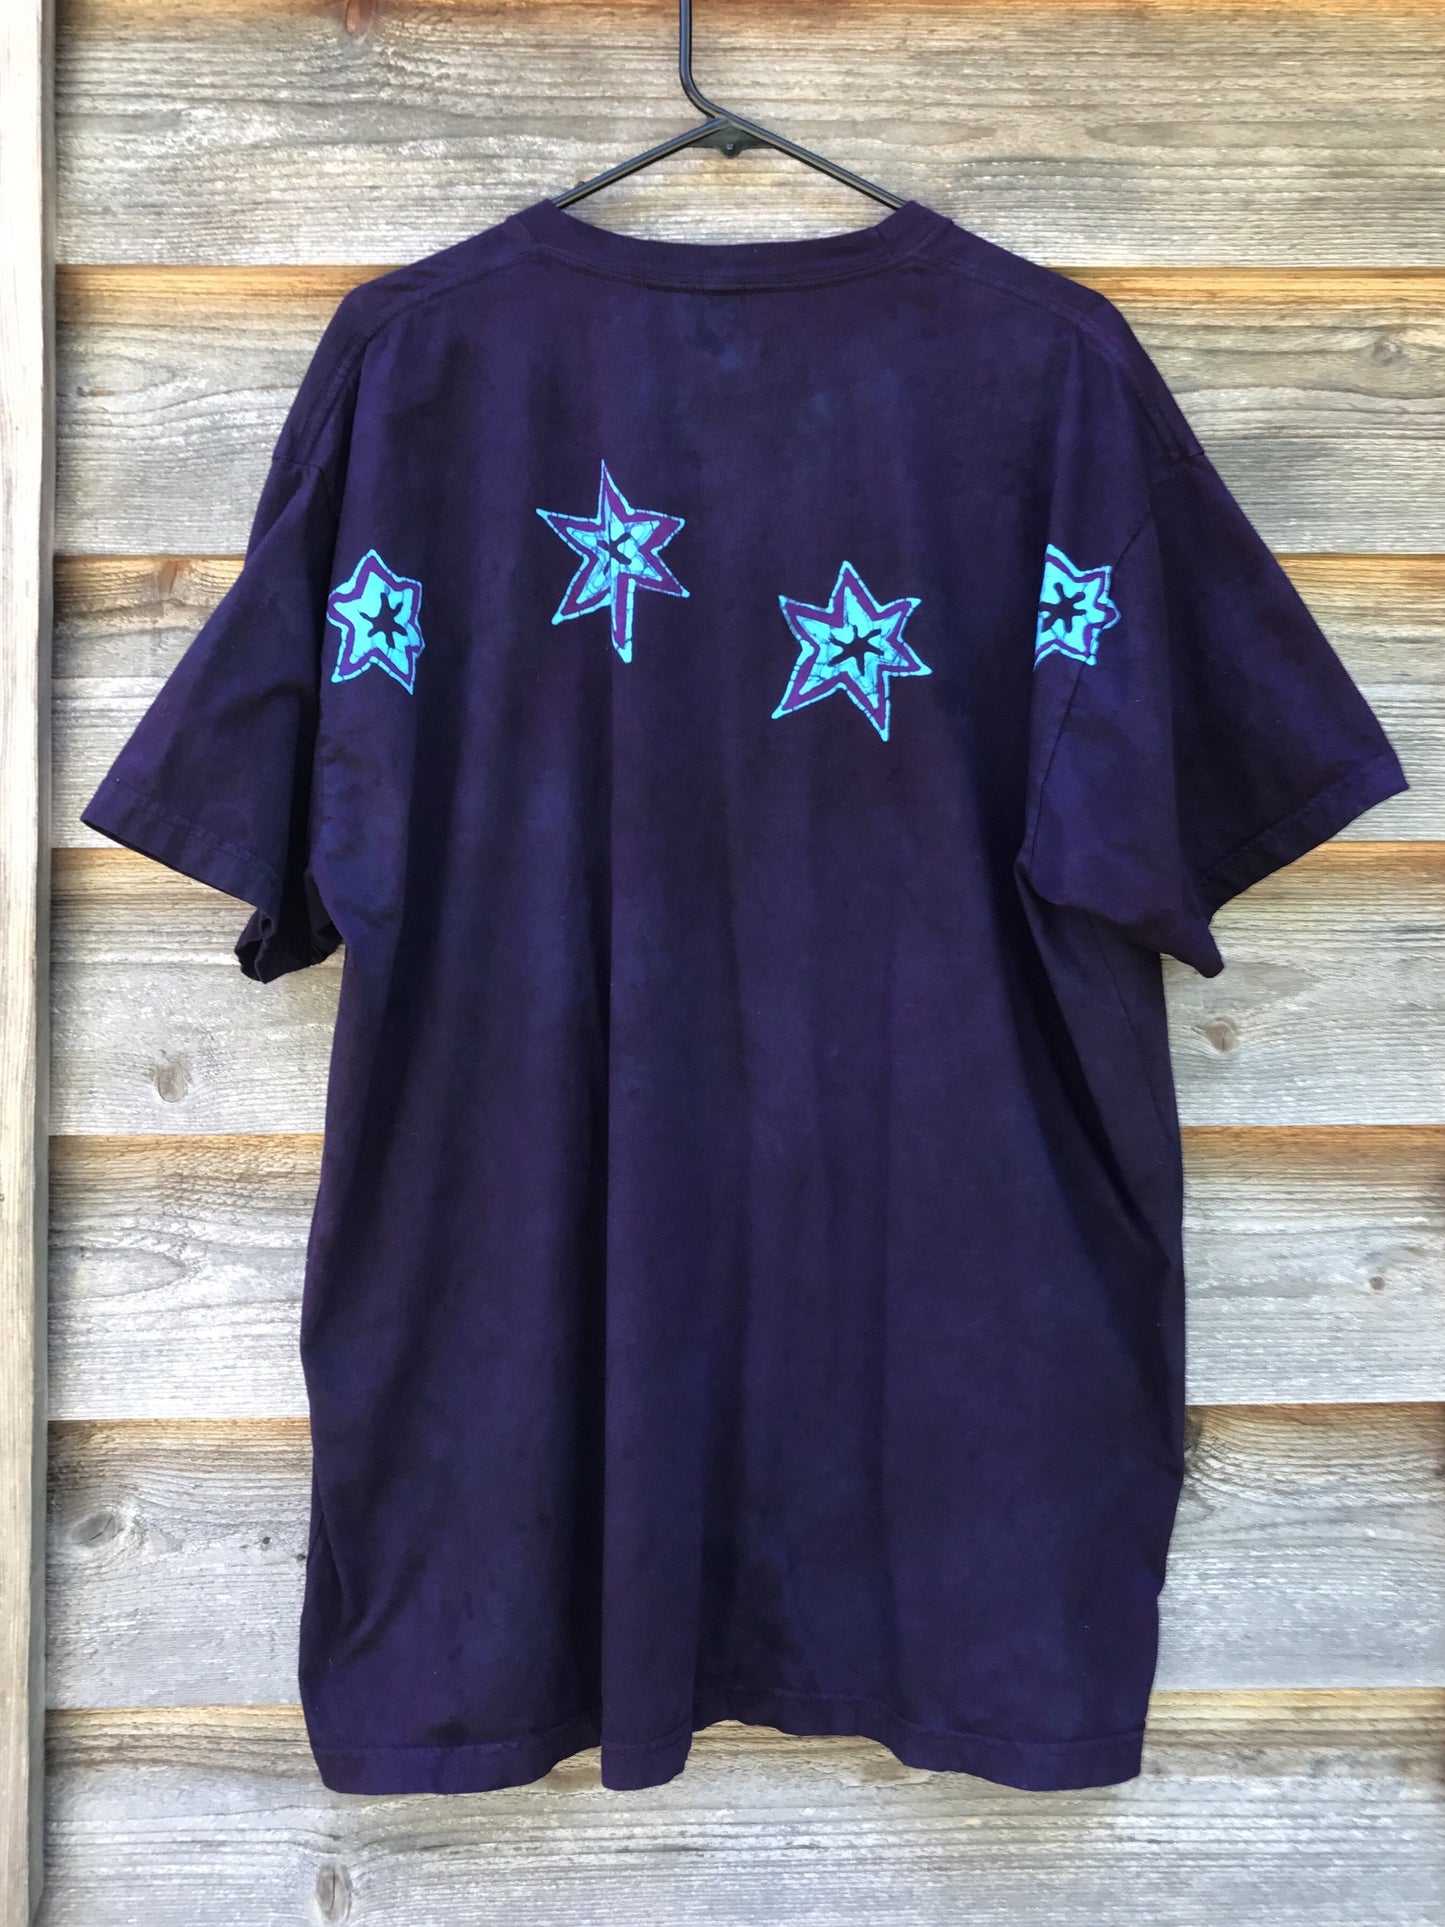 Deep Blue and Purple Moon Handmade Batik Tshirt - Size 3X Tall